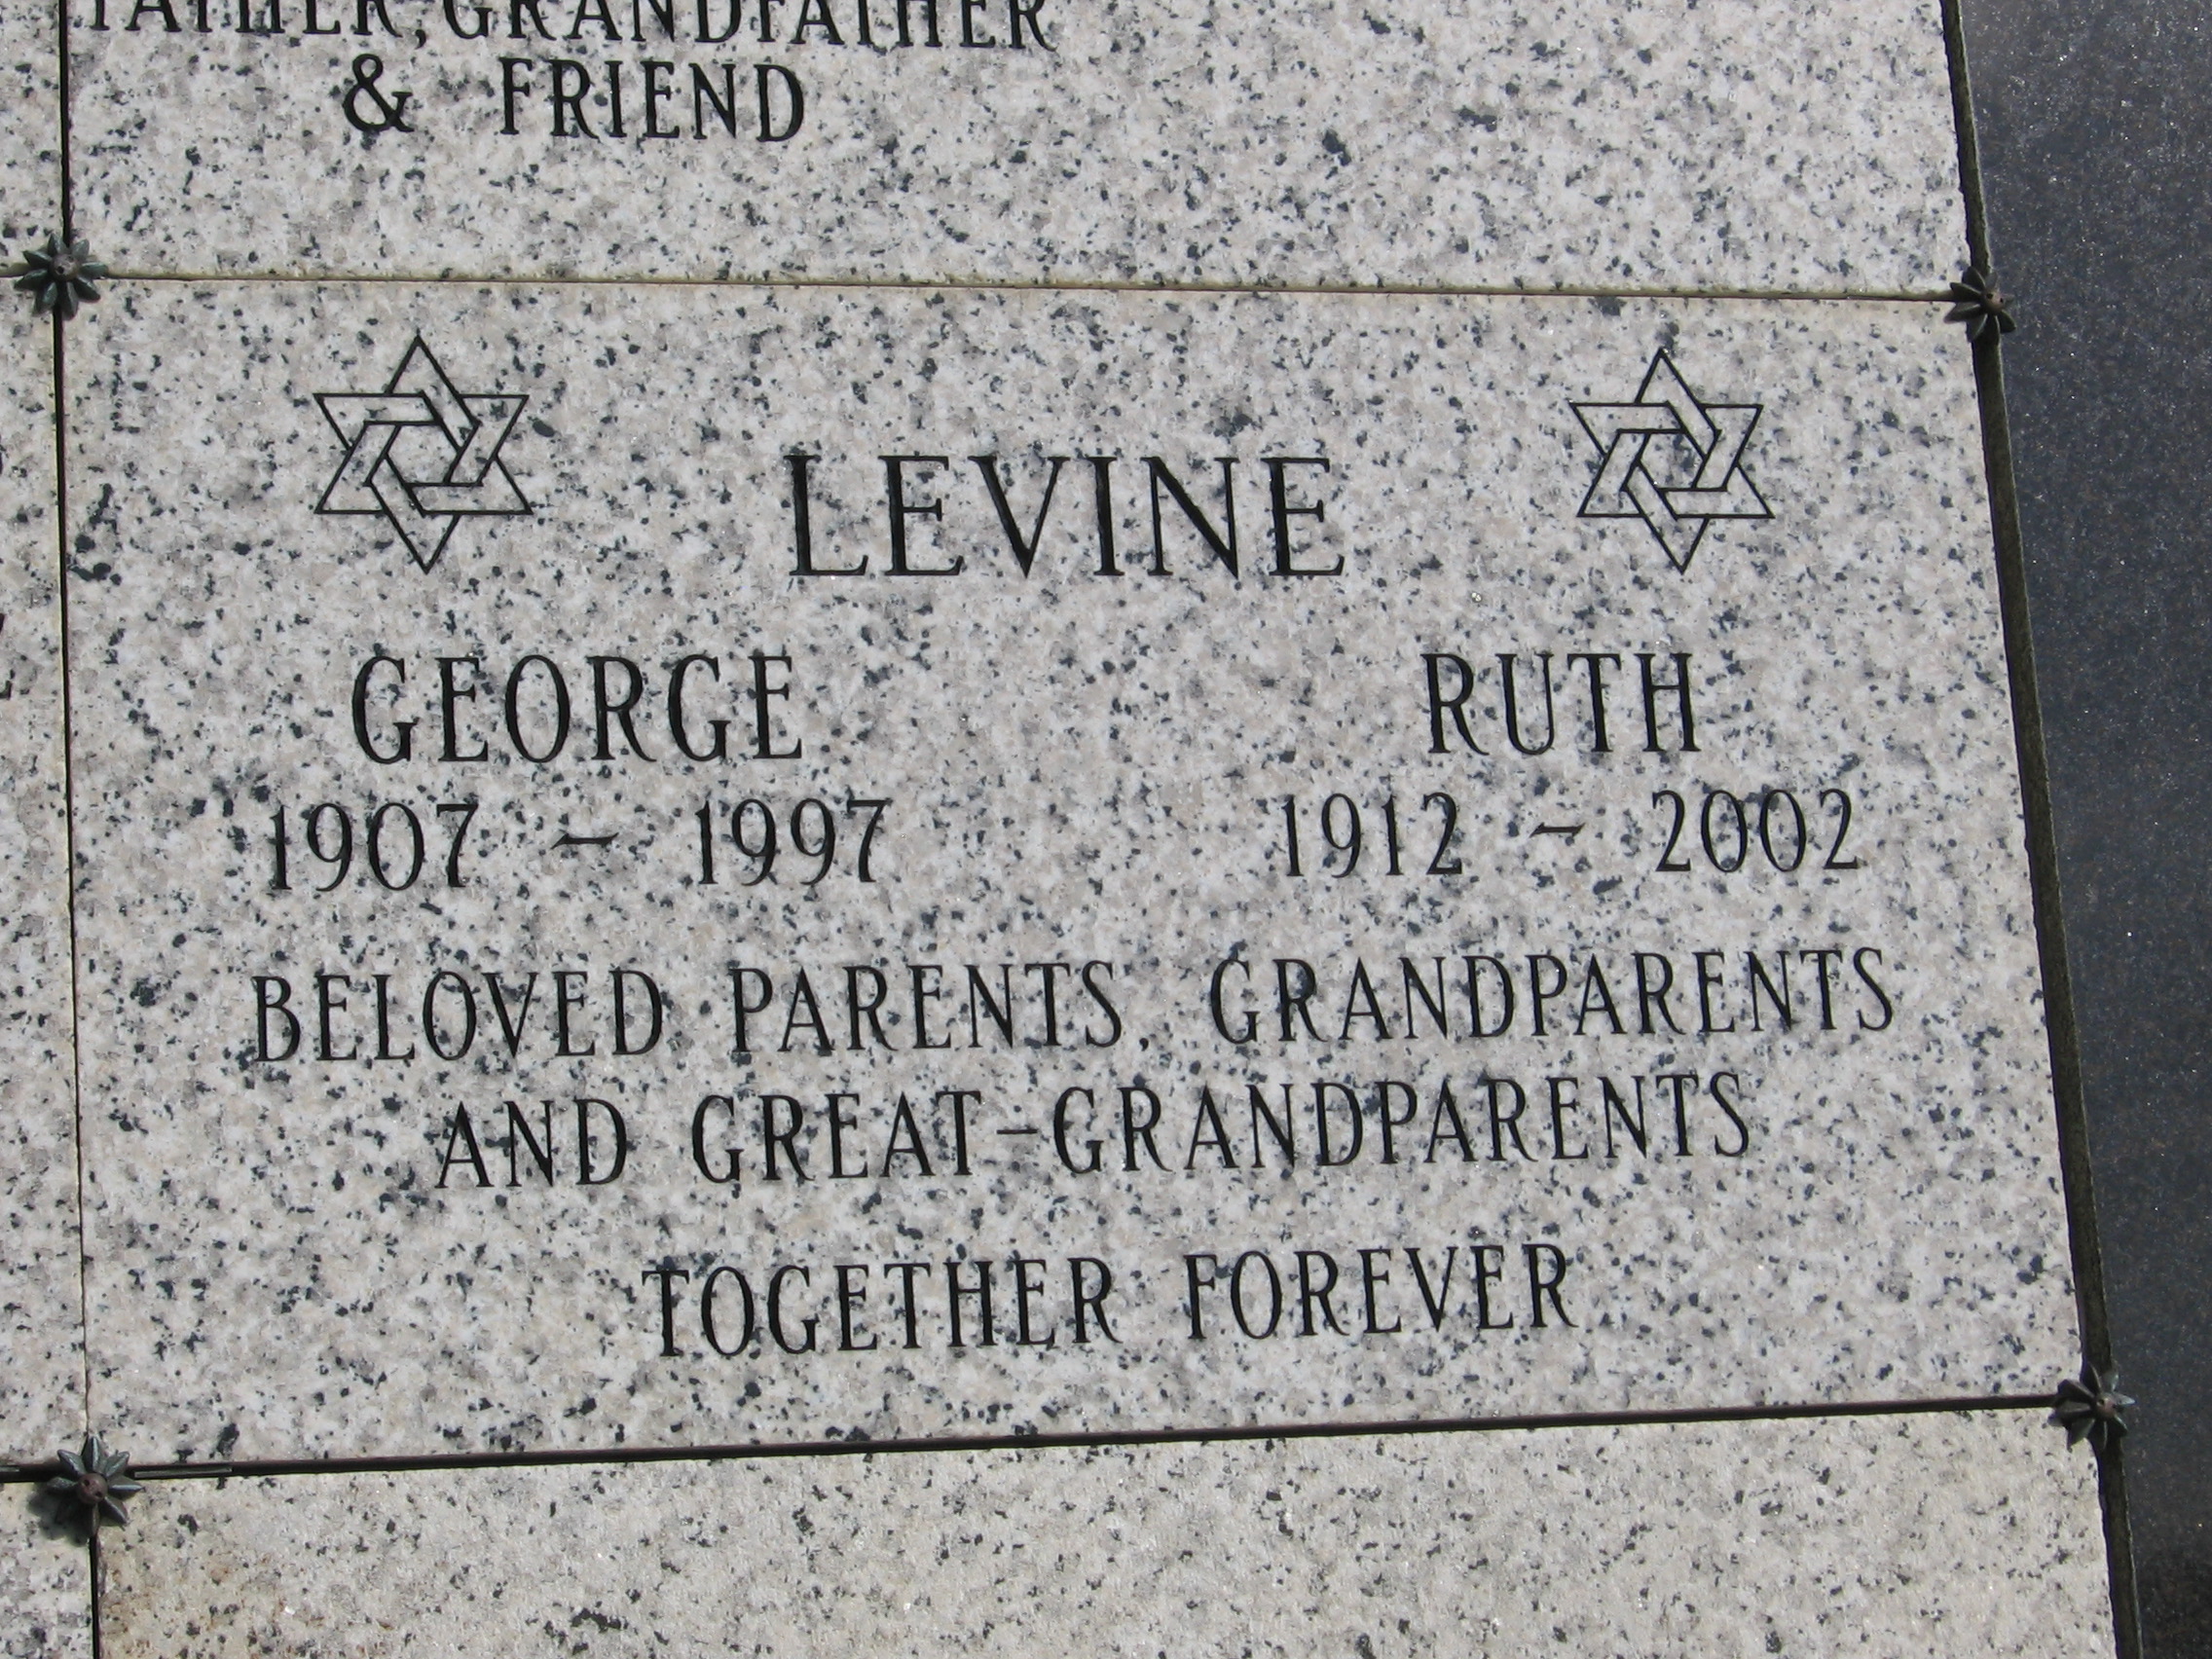 George Levine